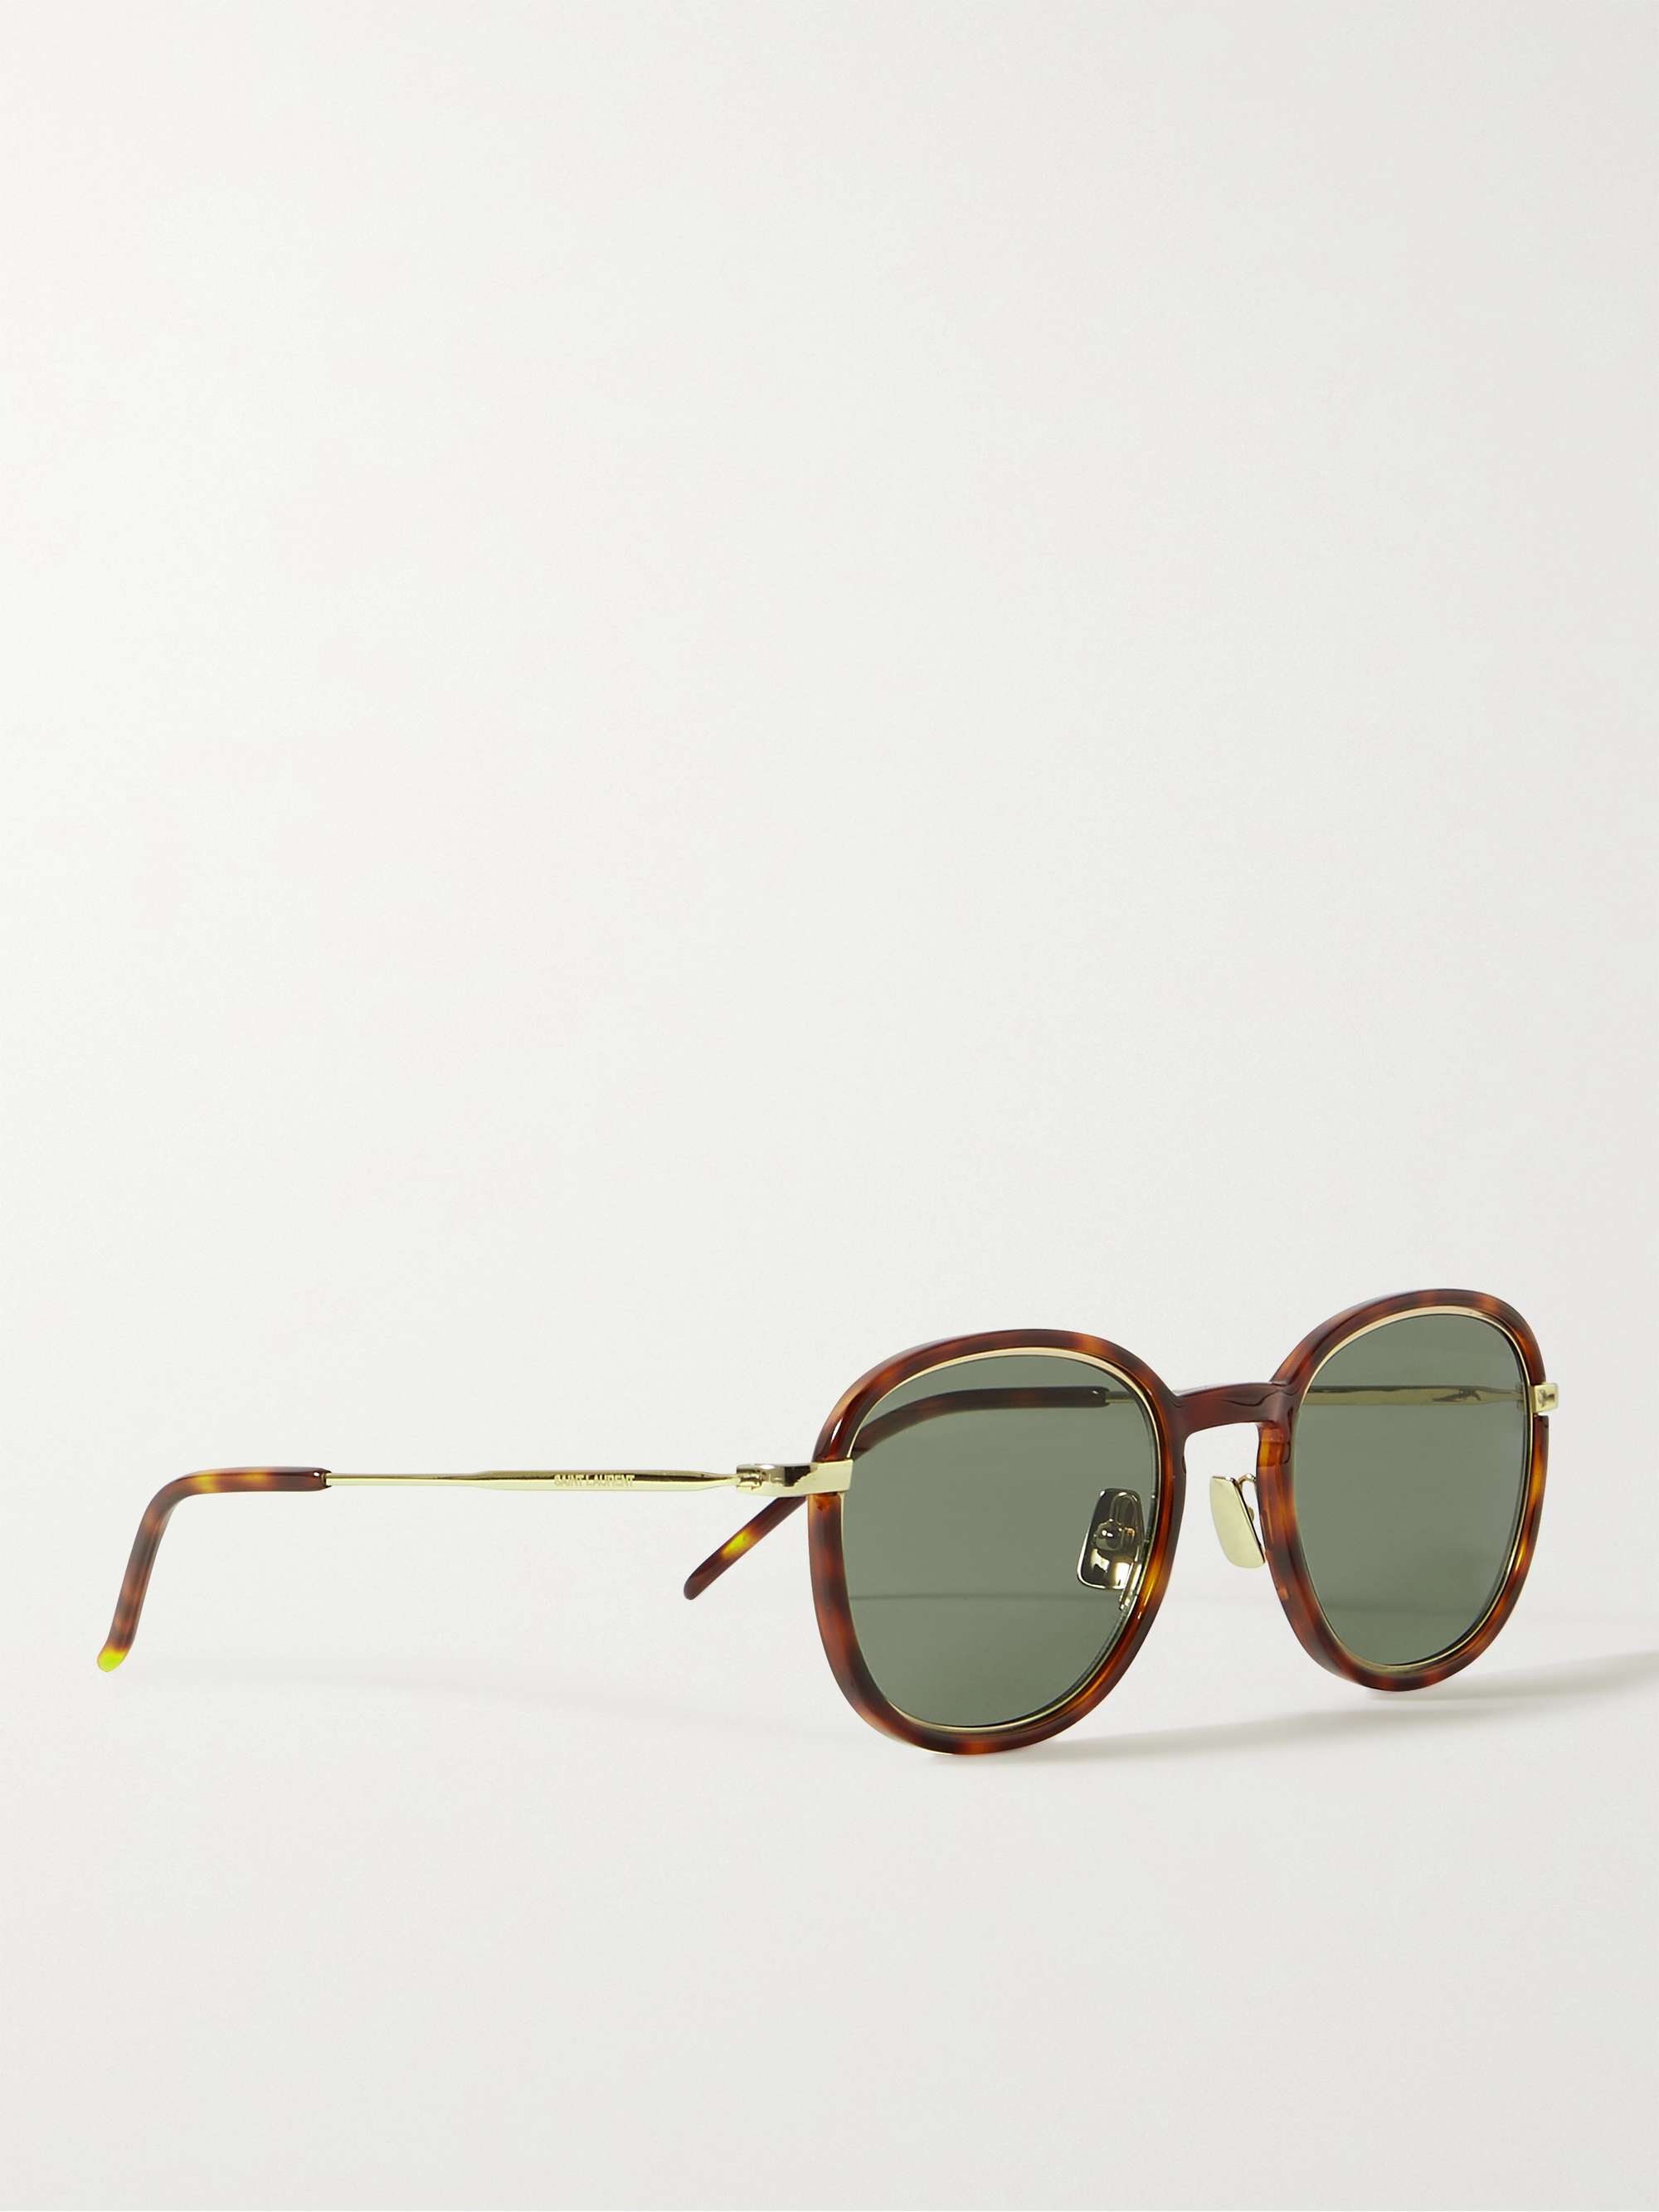 SAINT LAURENT EYEWEAR Round-Frame Acetate and Silver-Tone Sunglasses